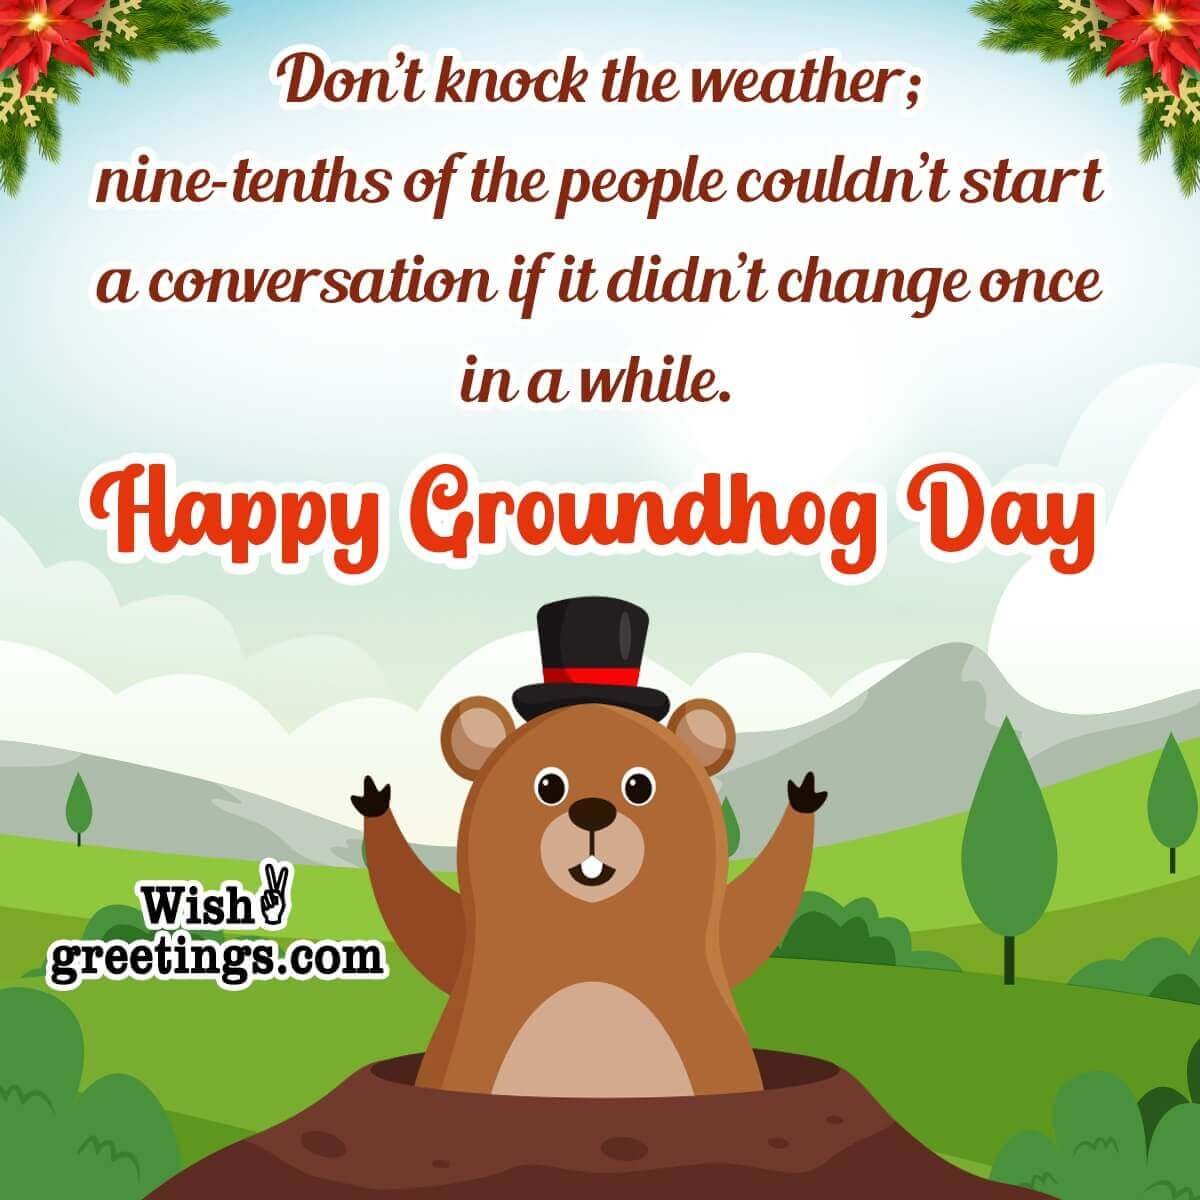 Happy Groundhog Day Message Image